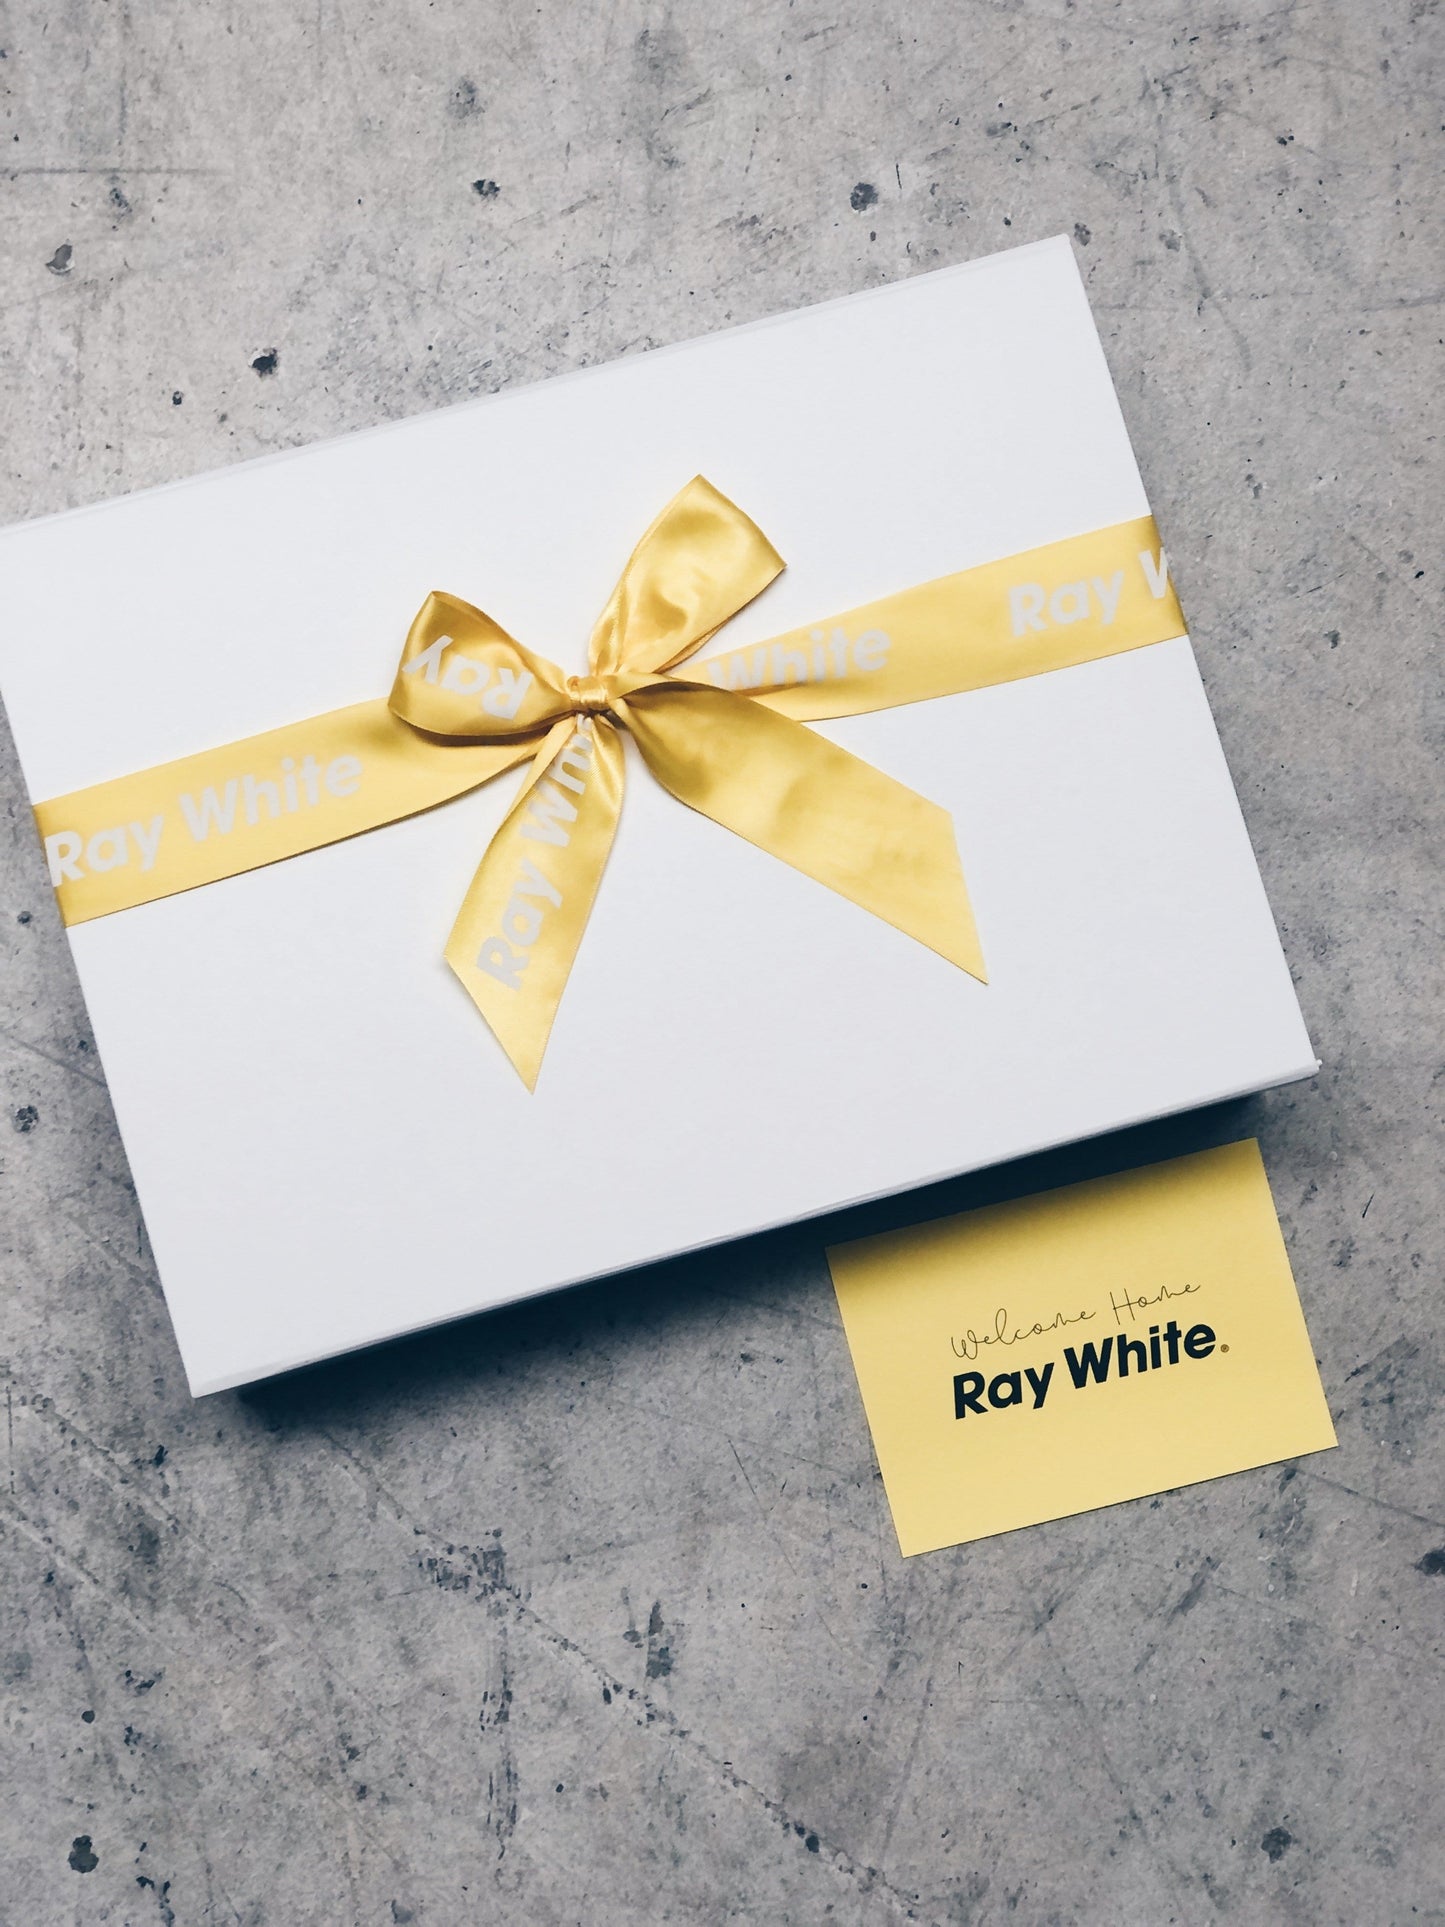 Ray White Werribee - The Penfolds